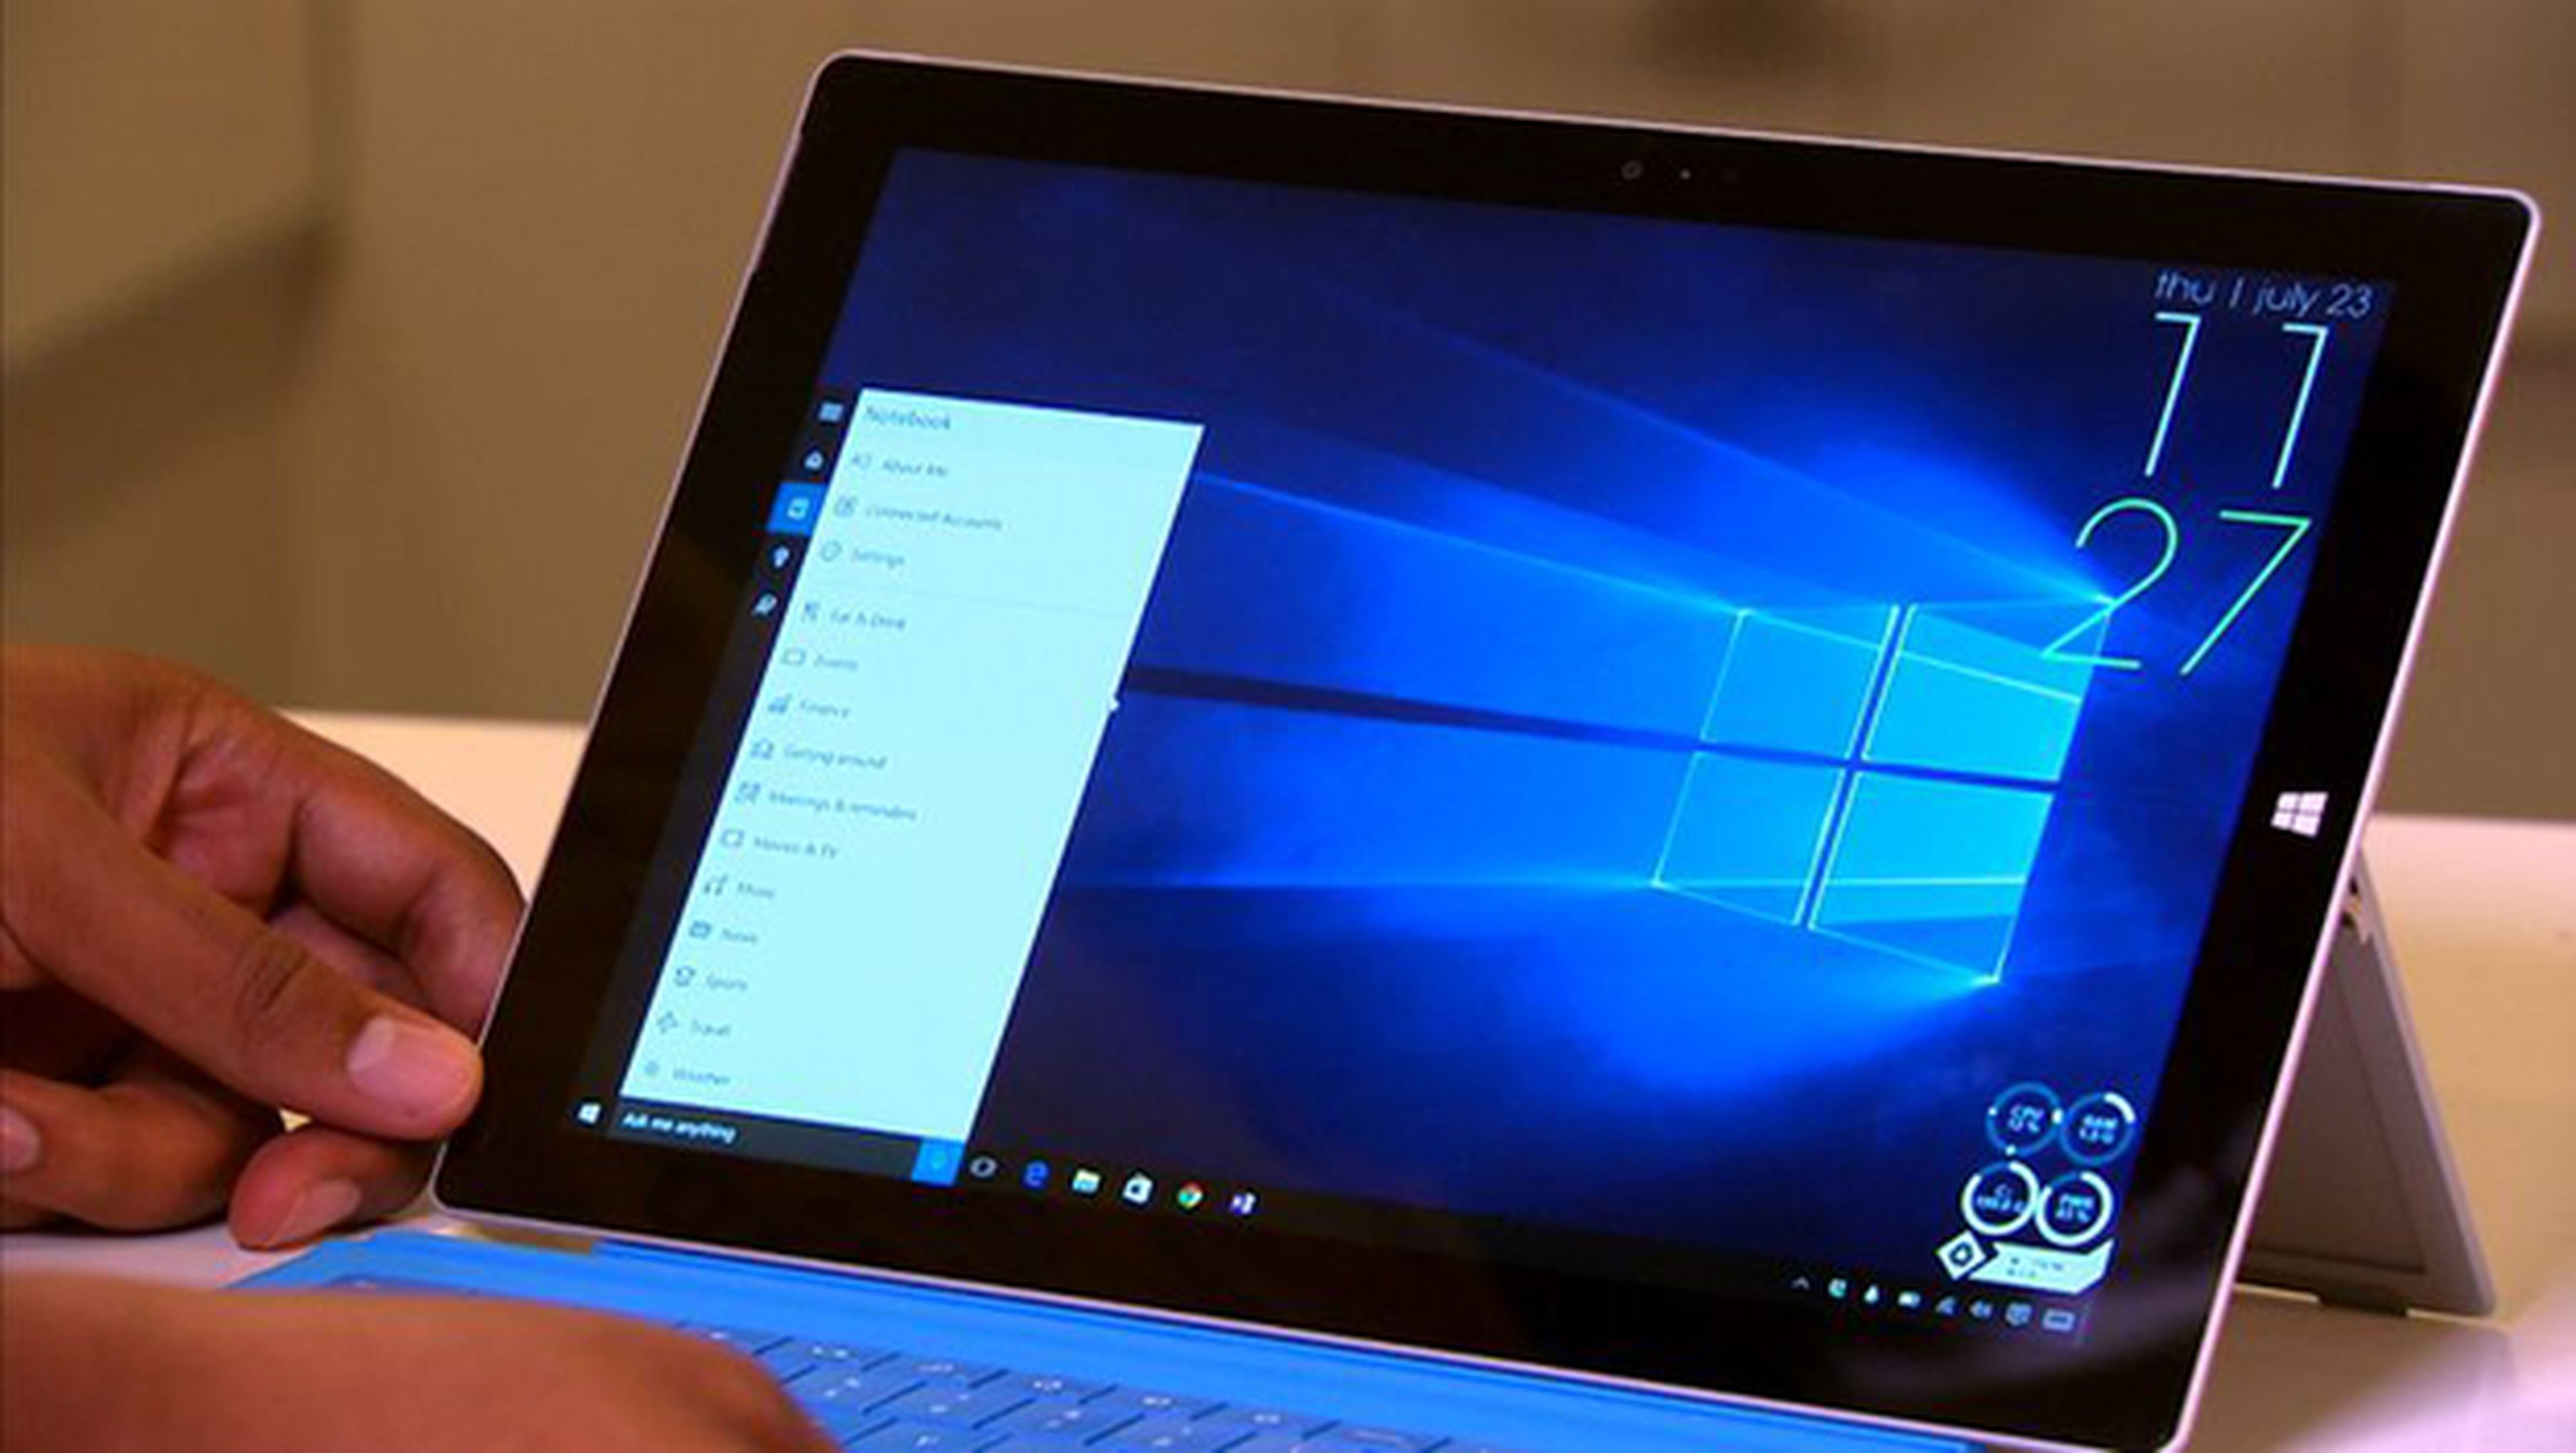 Windows 10 sigue ganando cuota de mercado globalmente